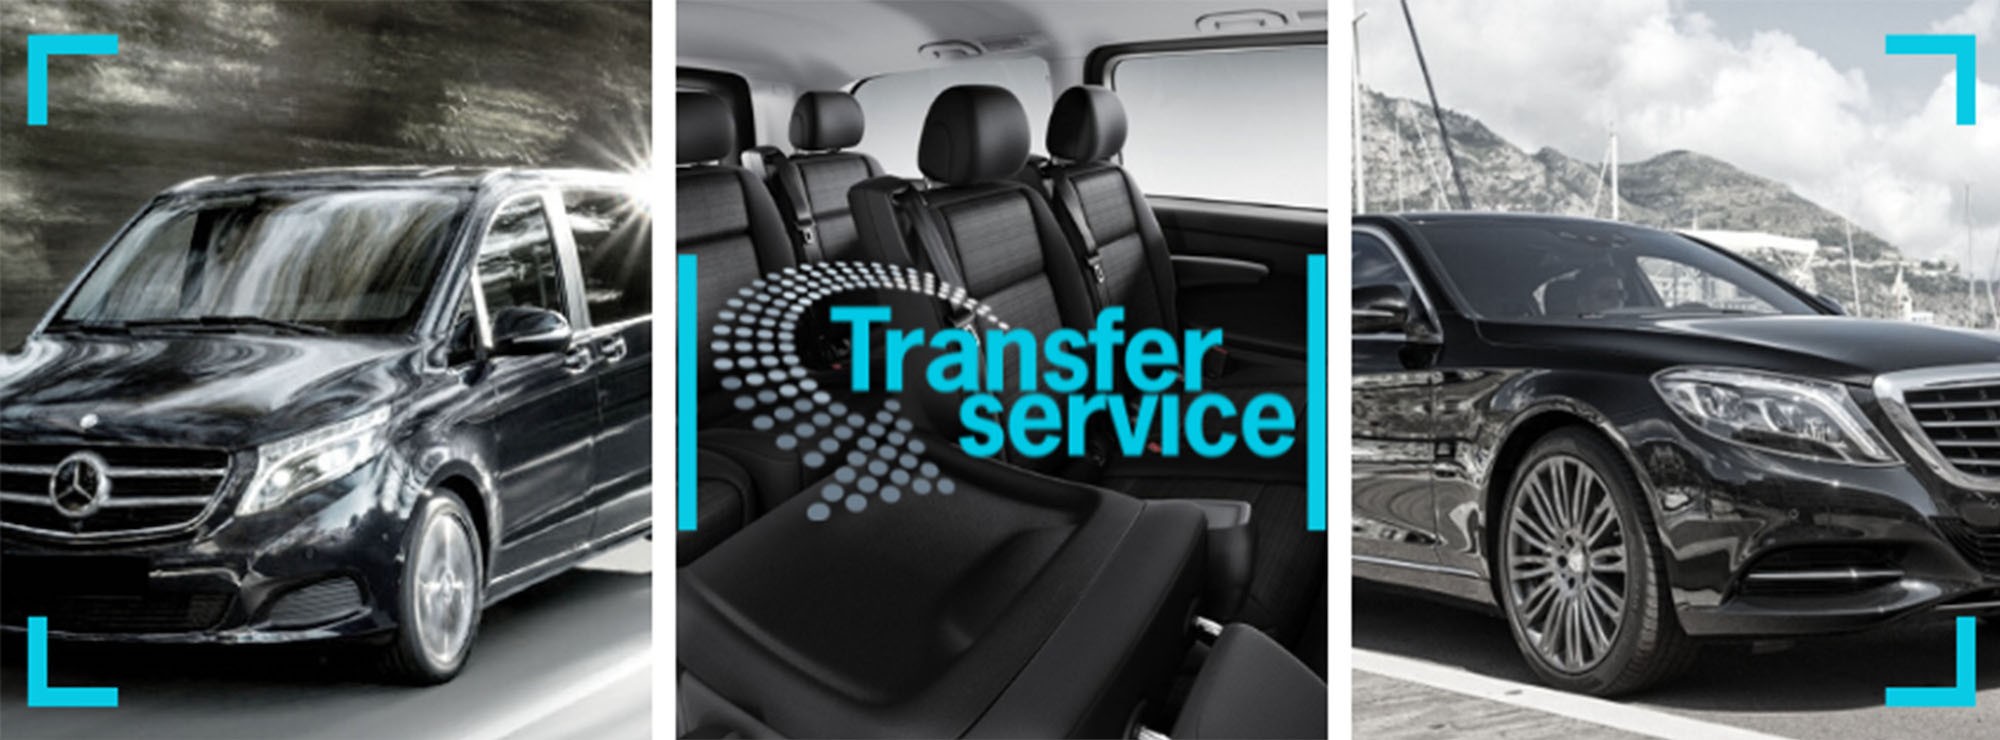 Header A-A Transferservice - Taxi Asse